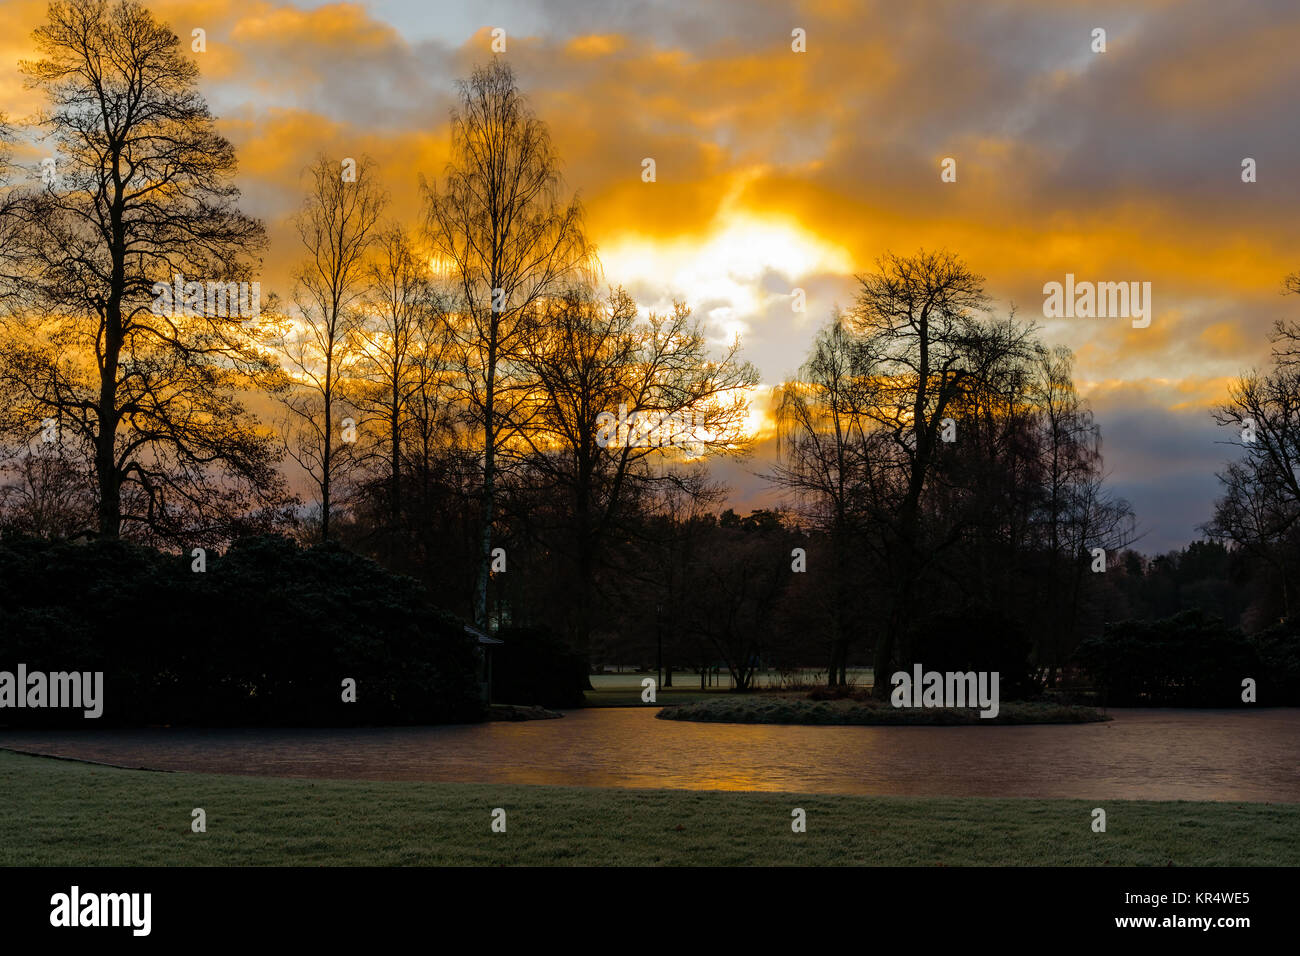 Orange sunrise over frozen pond and trees in public park. Location Ronneby in Blekinge, Sweden. Stock Photo